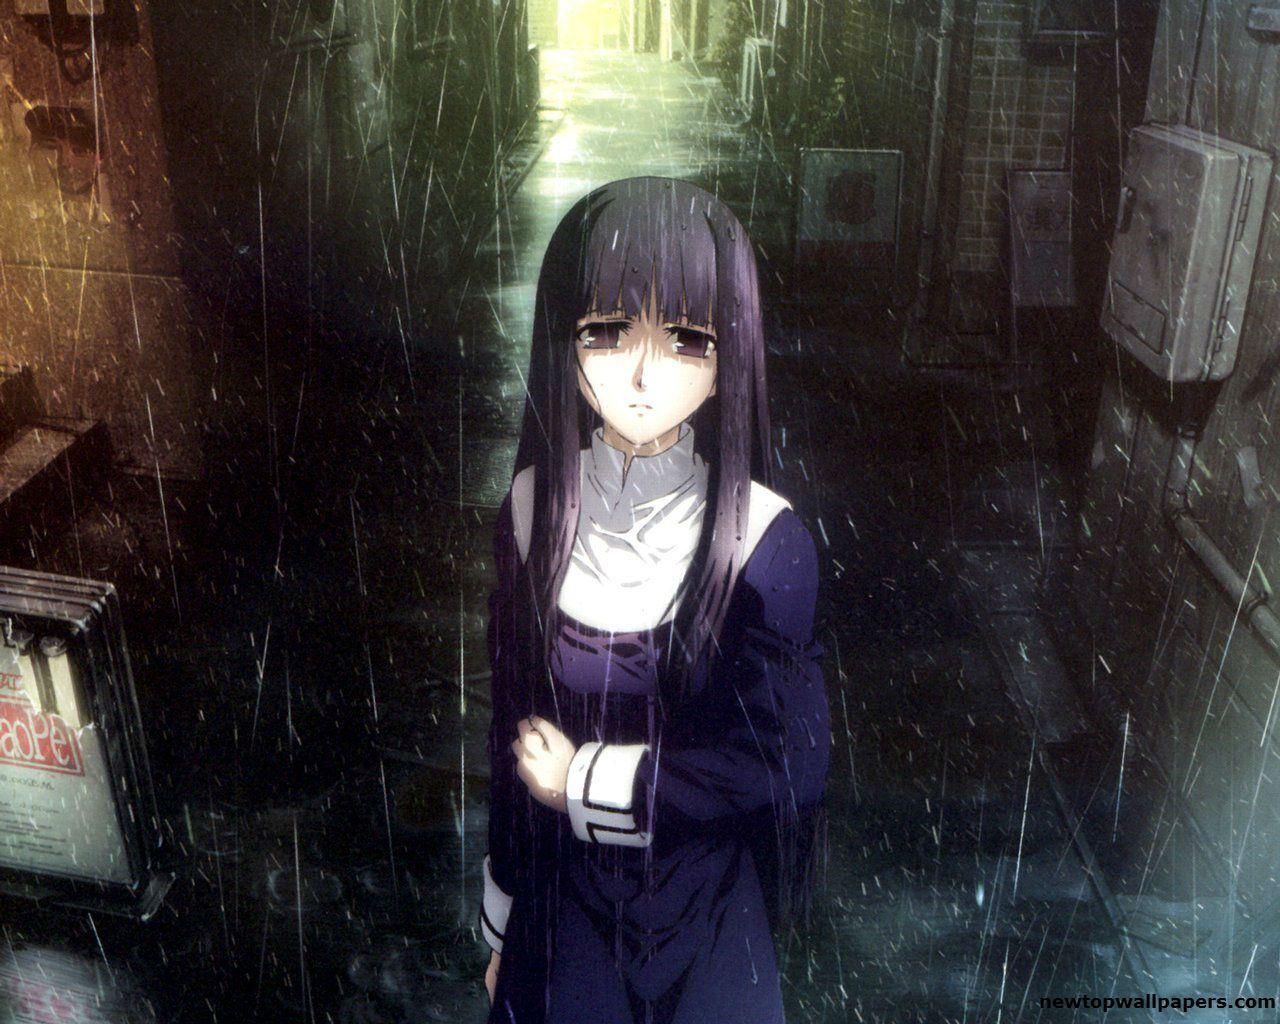 Sad Anime Girl Wallpaper HD Background, Image, Pics, Photo Free